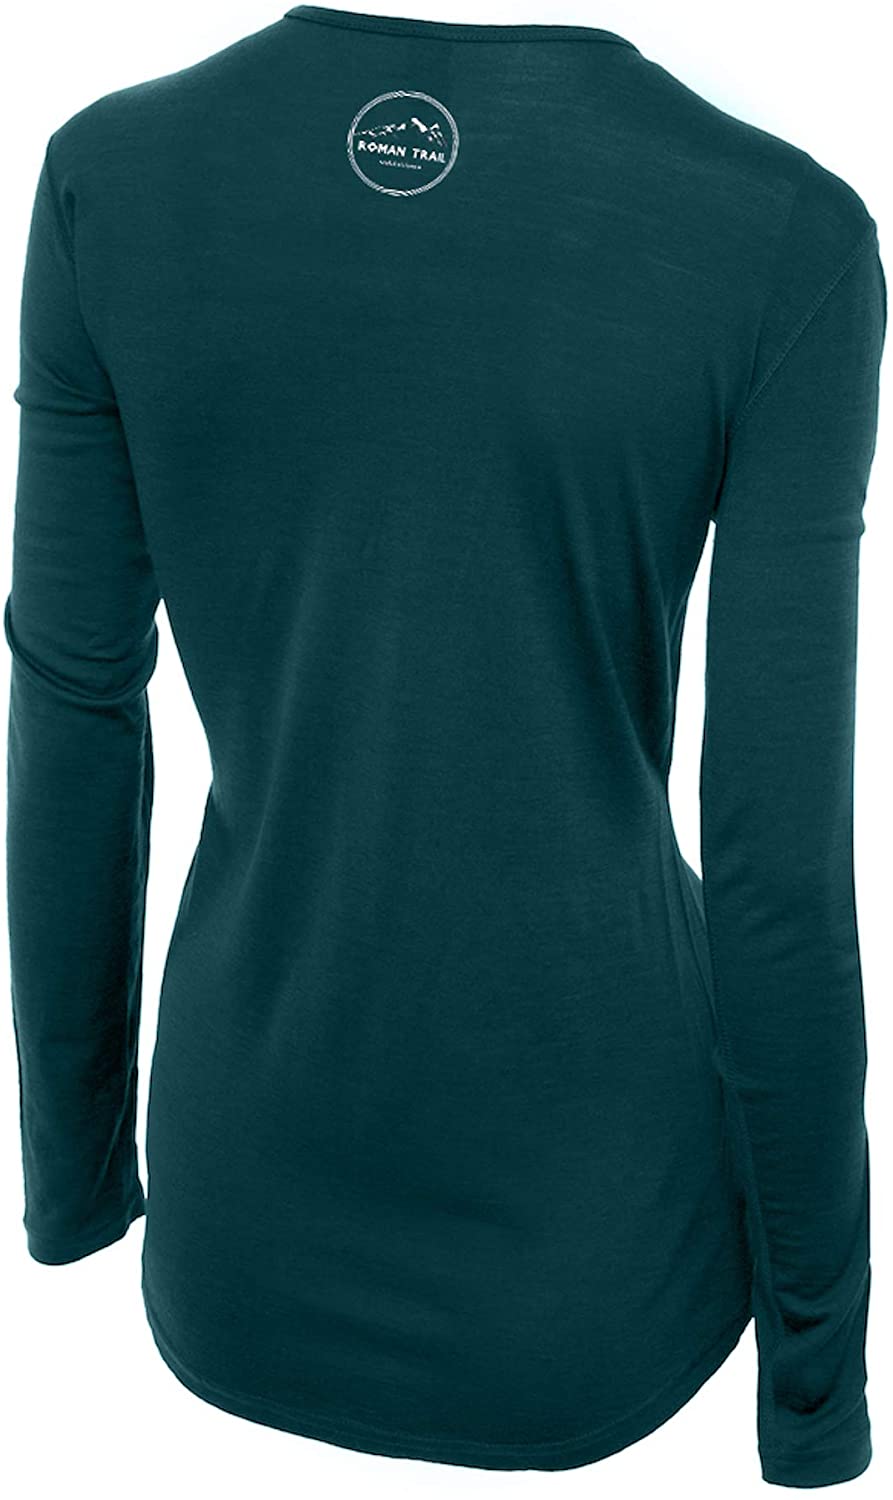 Merino Wool Women's Long Sleeve Top | Crew Neck Shirt | Atlantic Teal